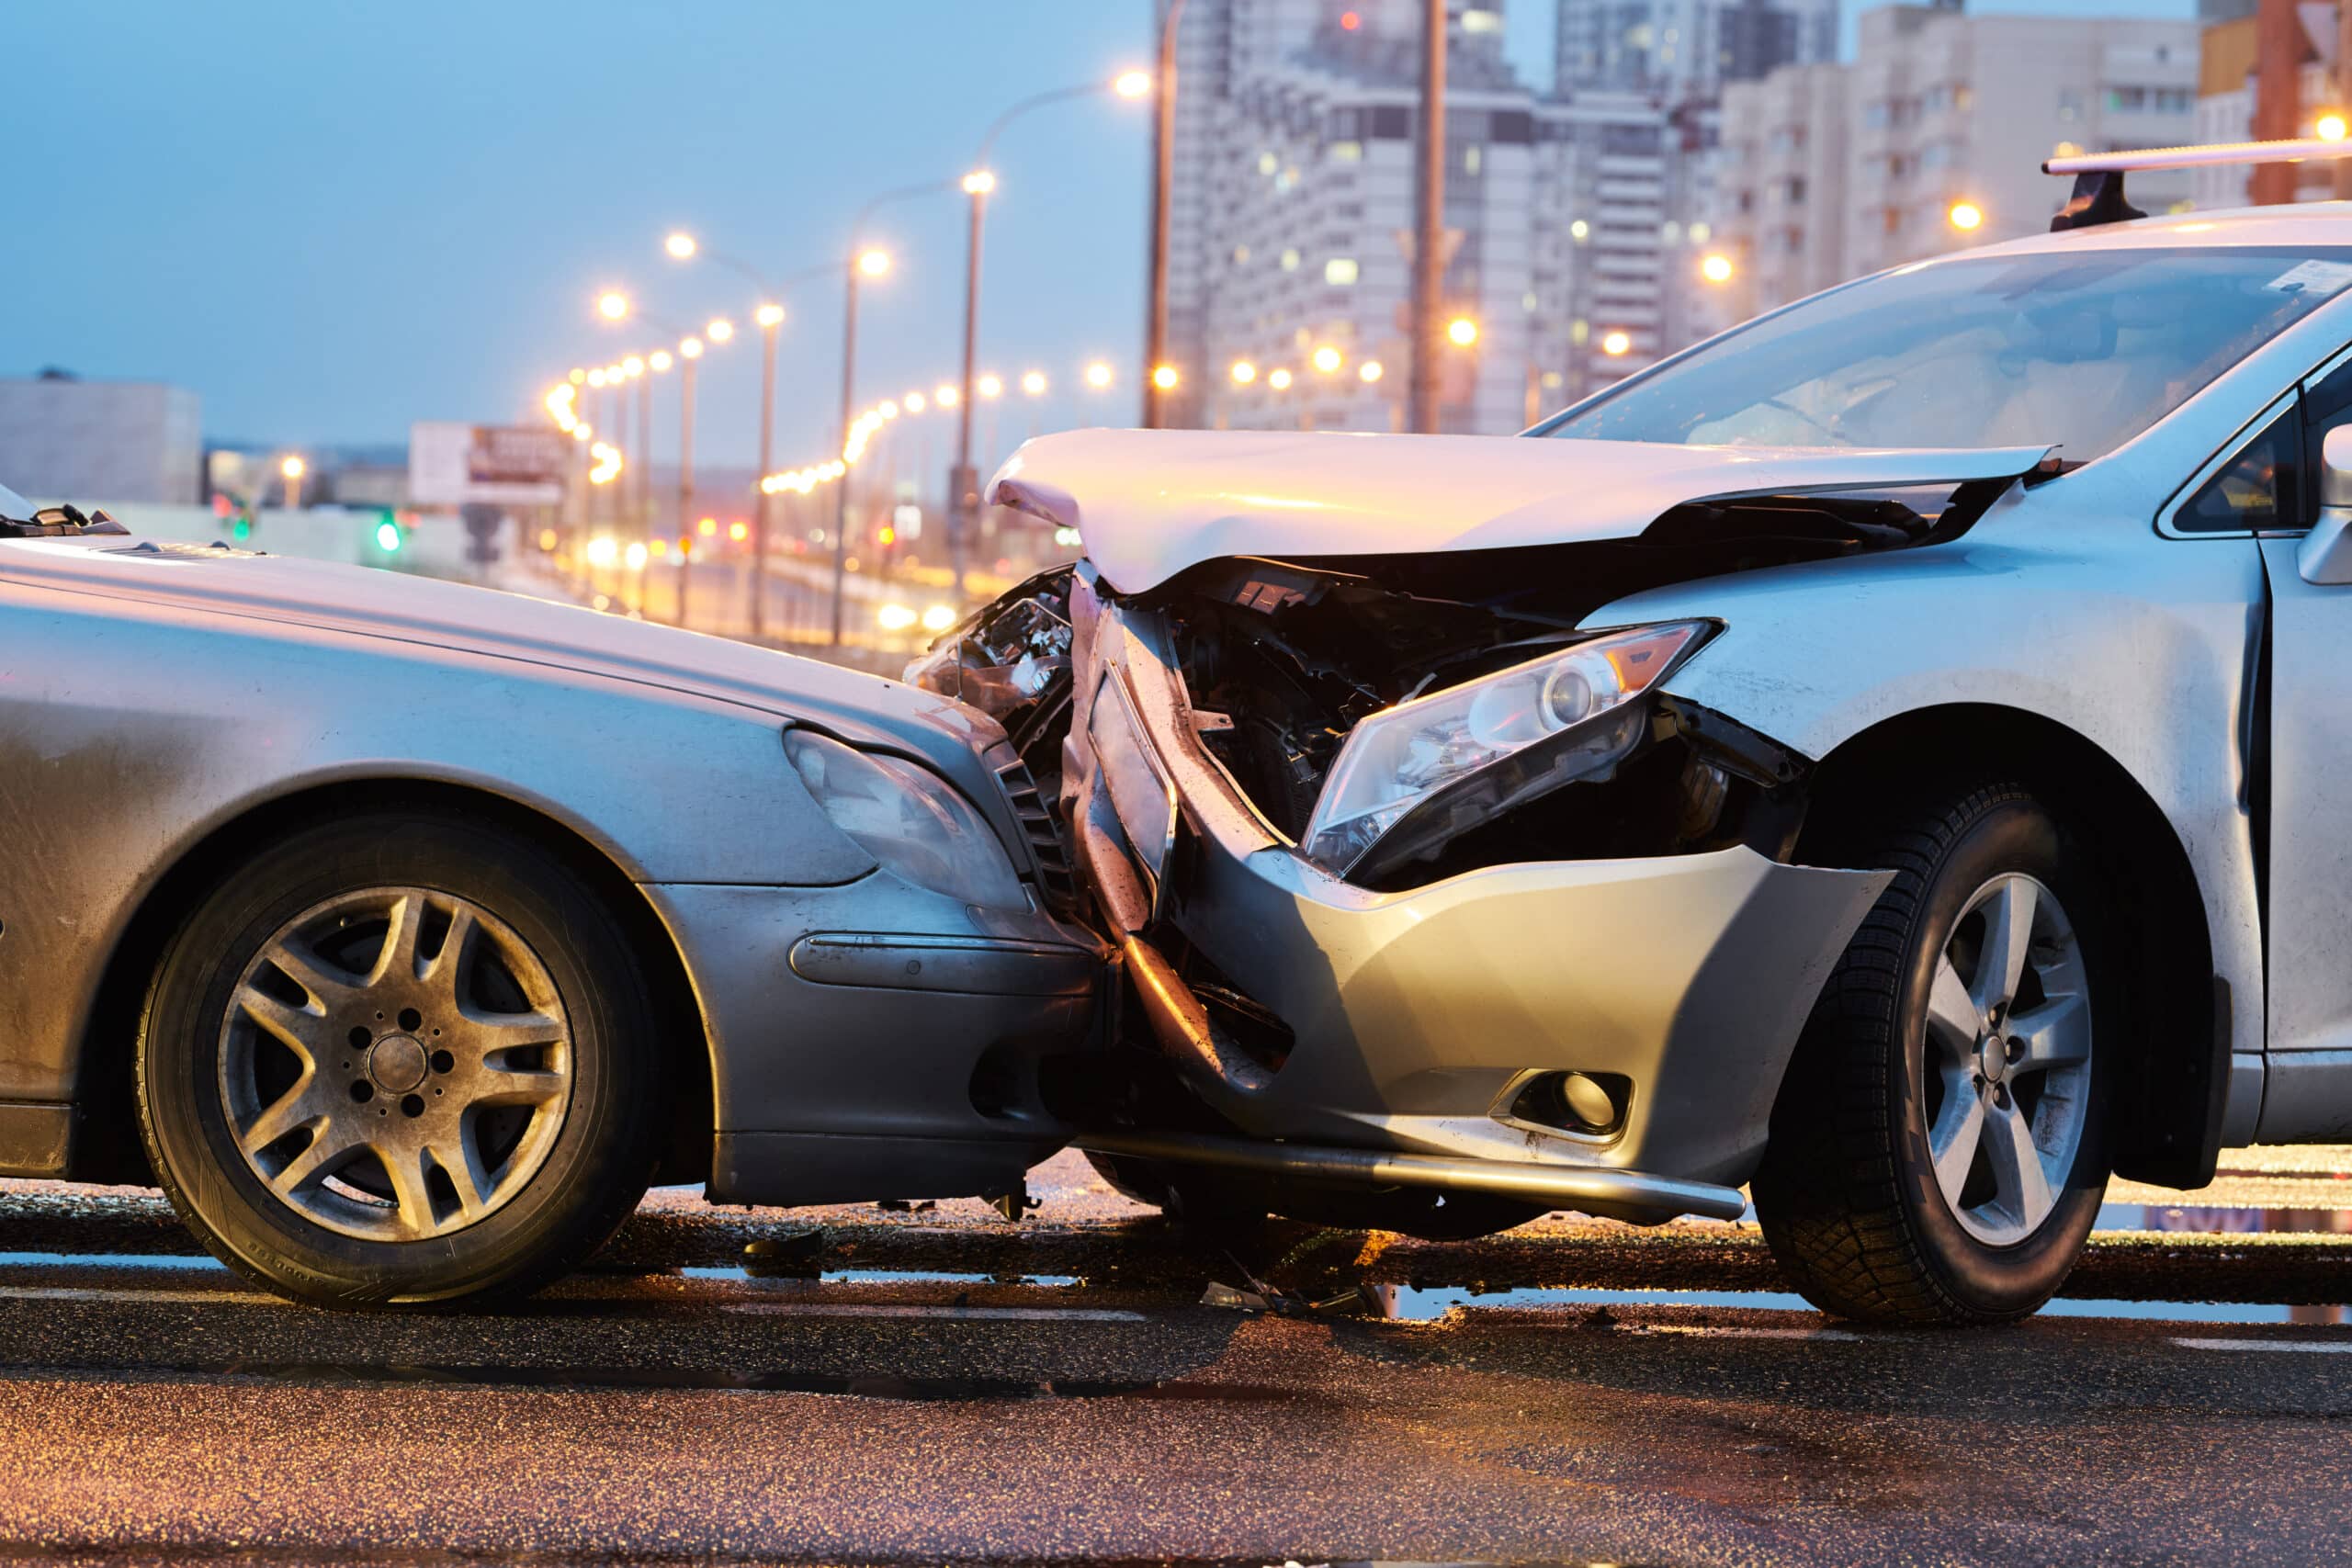 Virginia Automobile Accident Attorneys